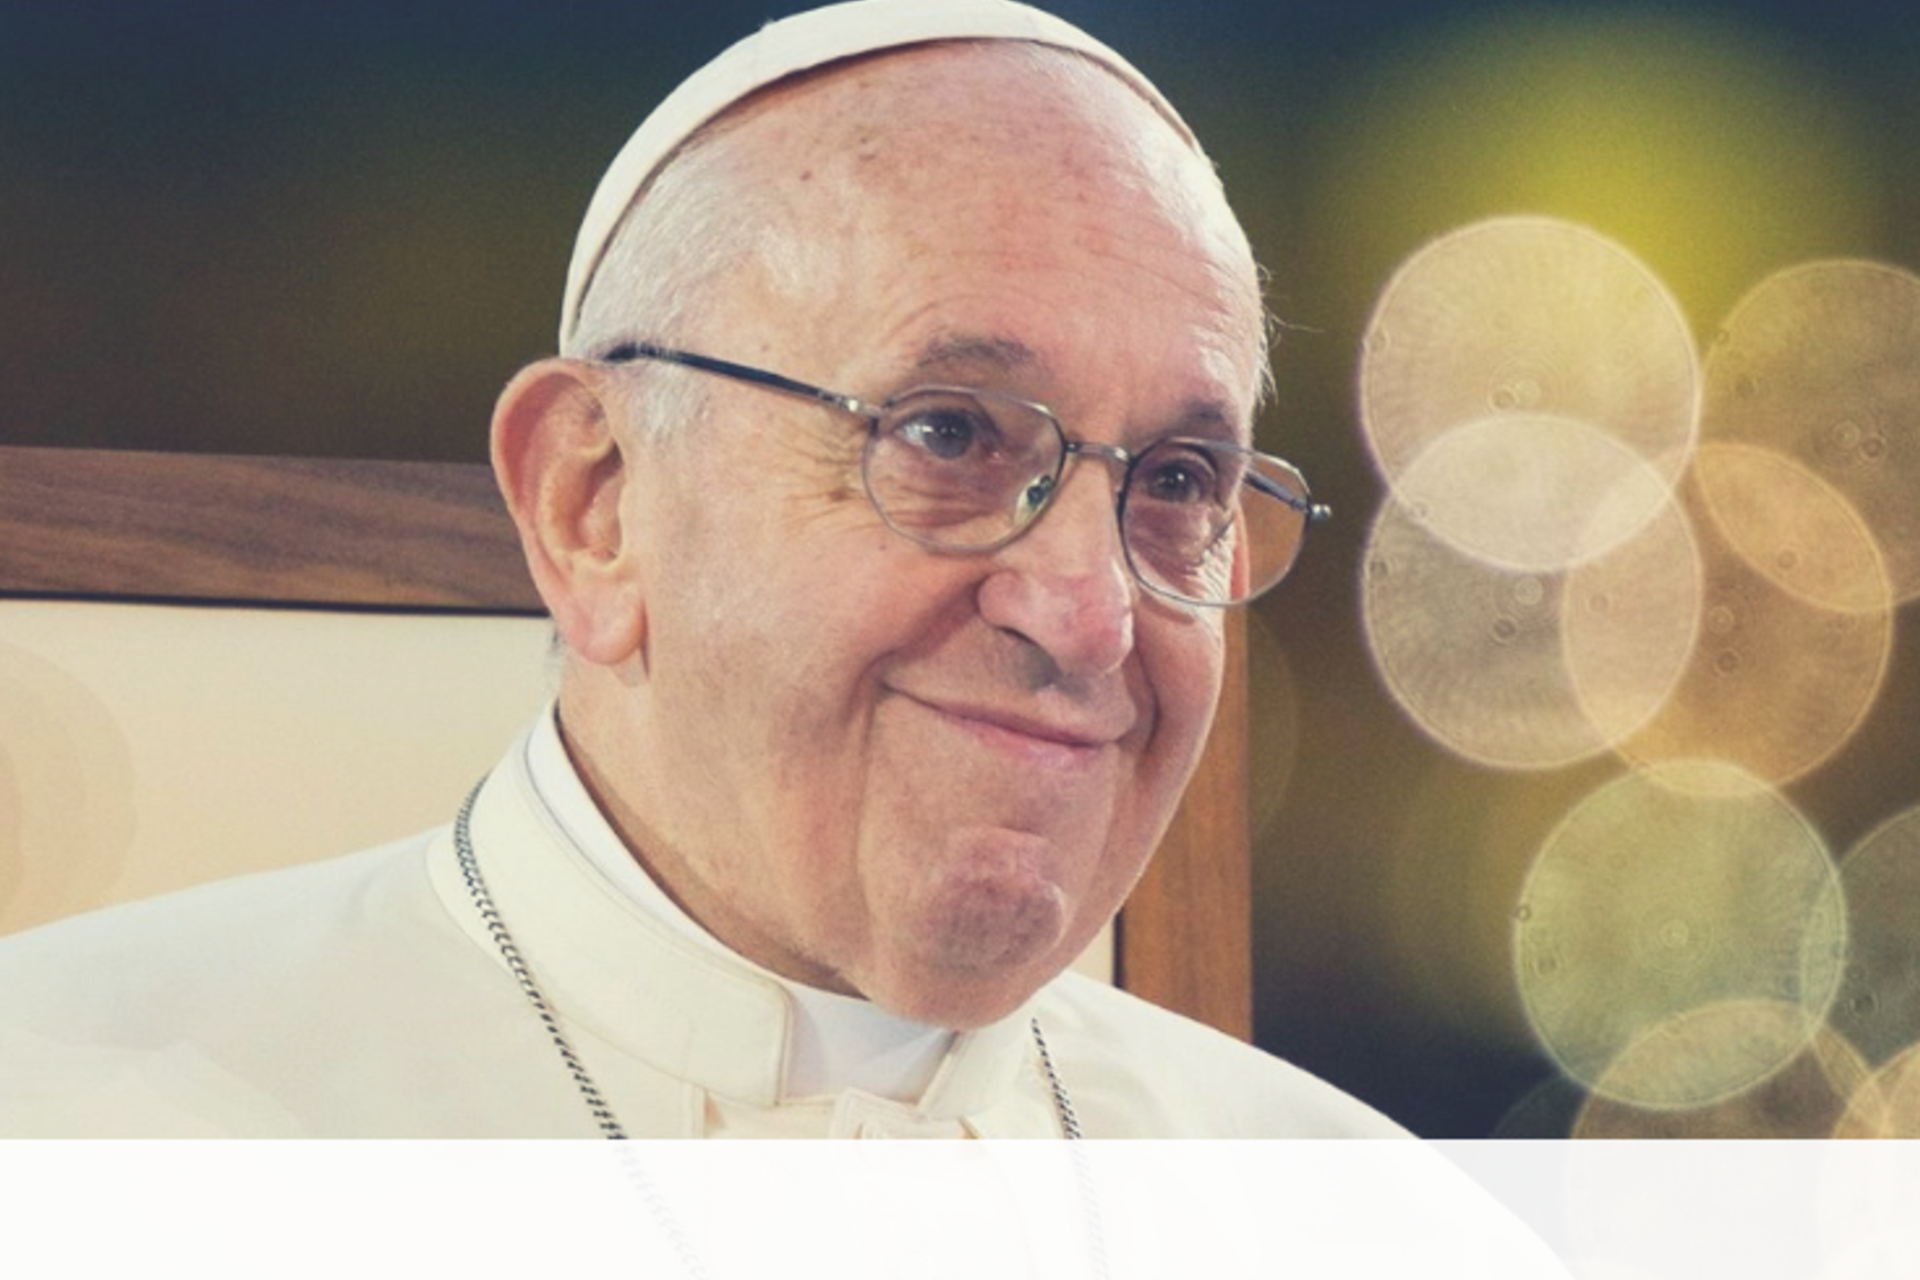 10 Takeaways from Pope Francis in Ireland